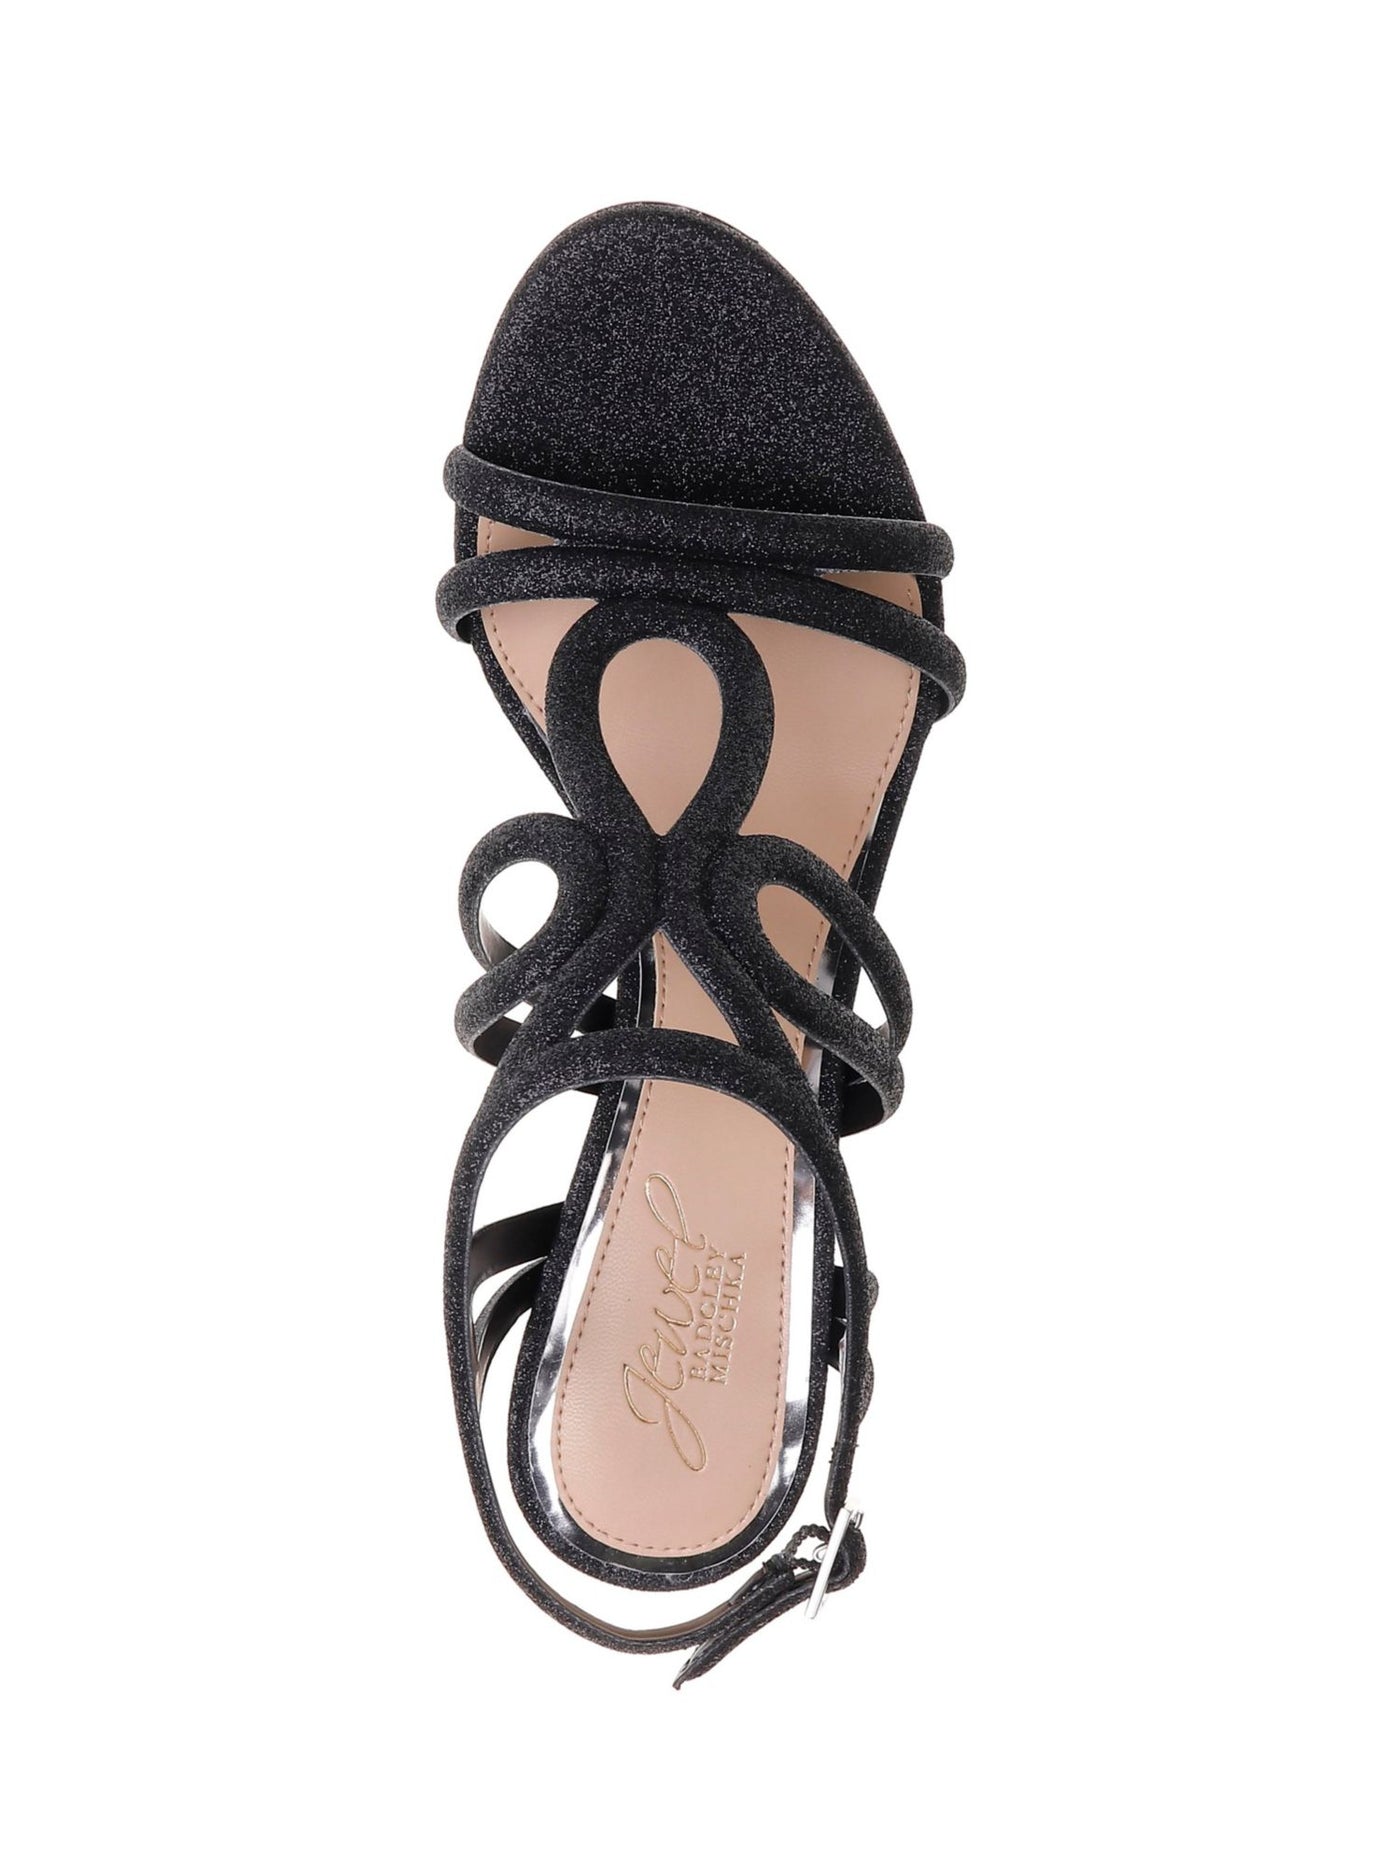 JEWEL BADGLEY MISCHKA Womens Black Cushioned Glitter Simba Round Toe Stiletto Buckle Dress Sandals Shoes 7